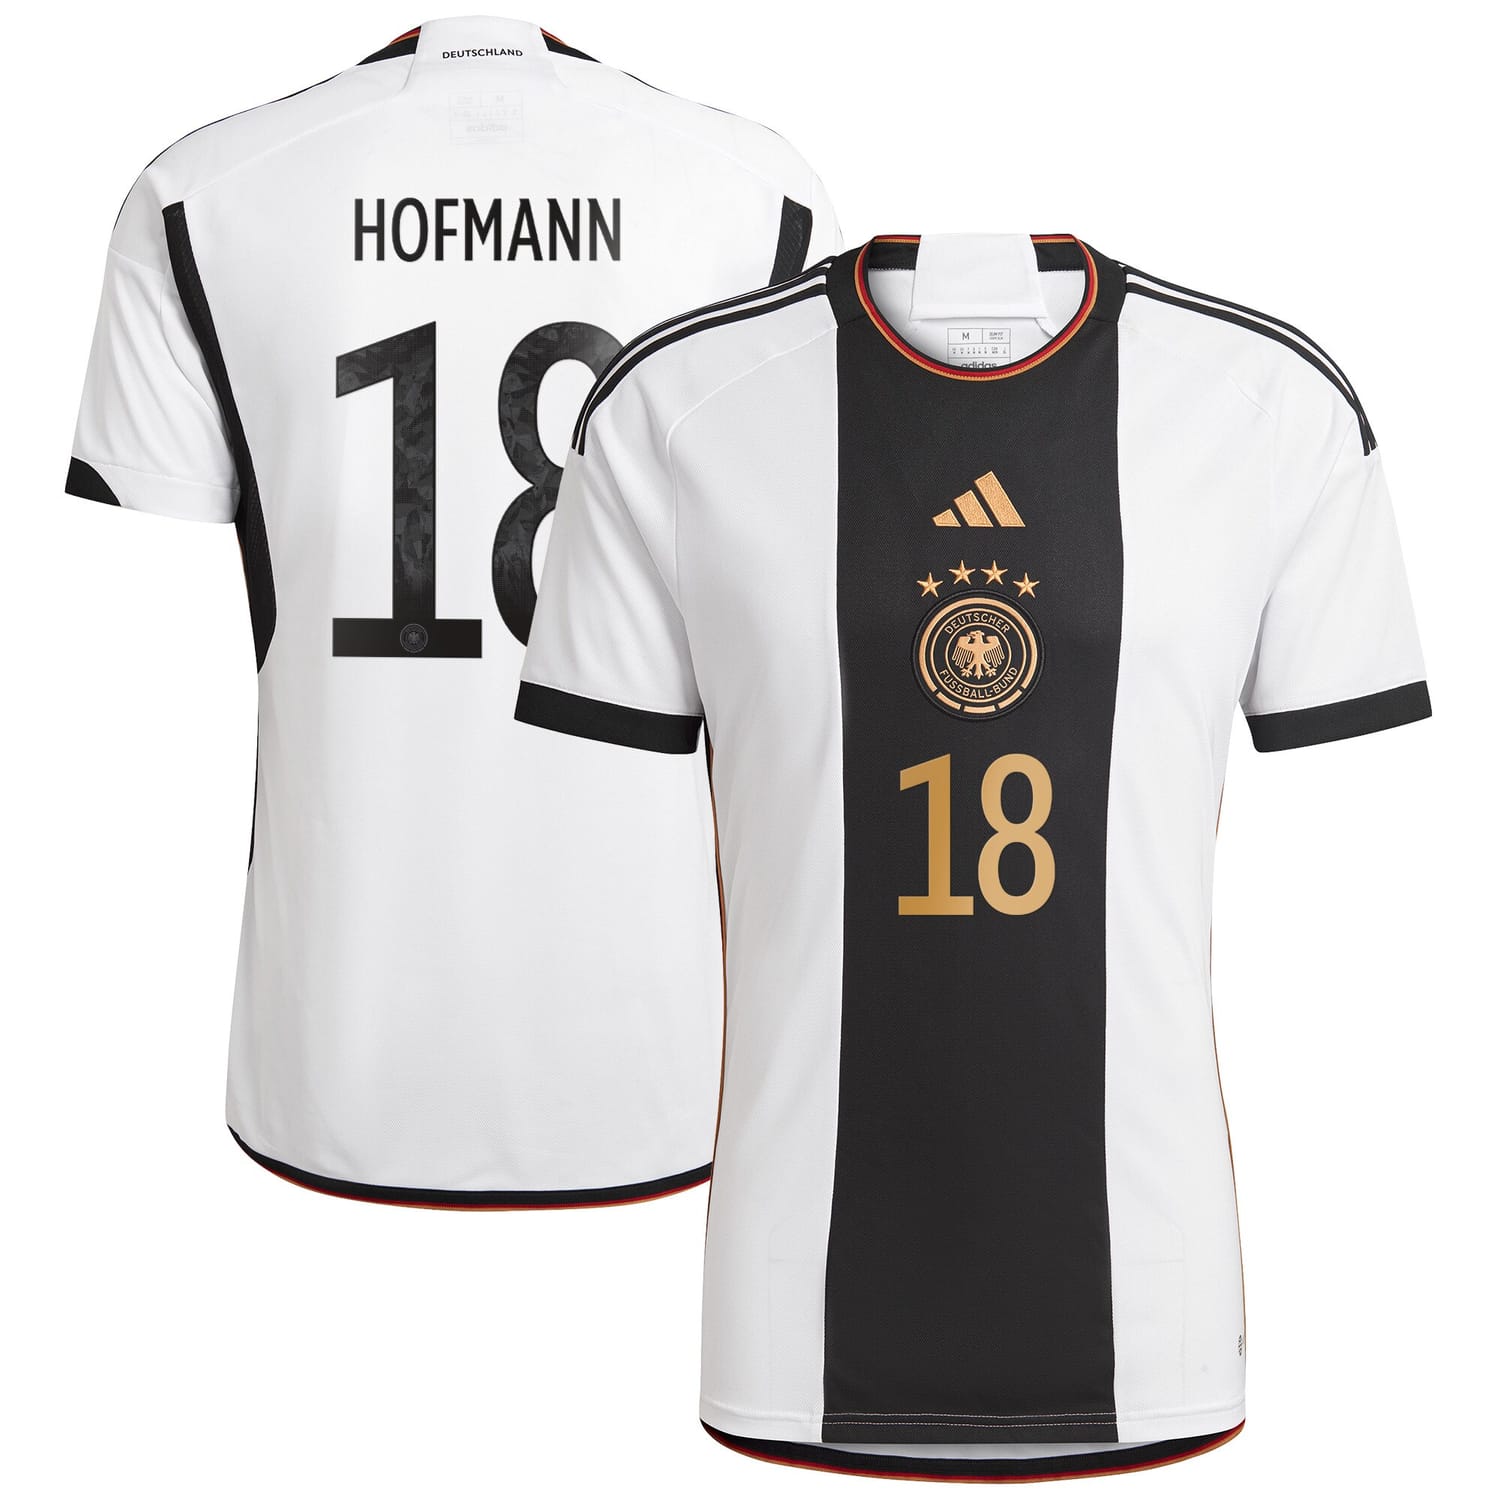 Germany National Team Home Jersey Shirt player Jonas Hofmann 18 printing for Men